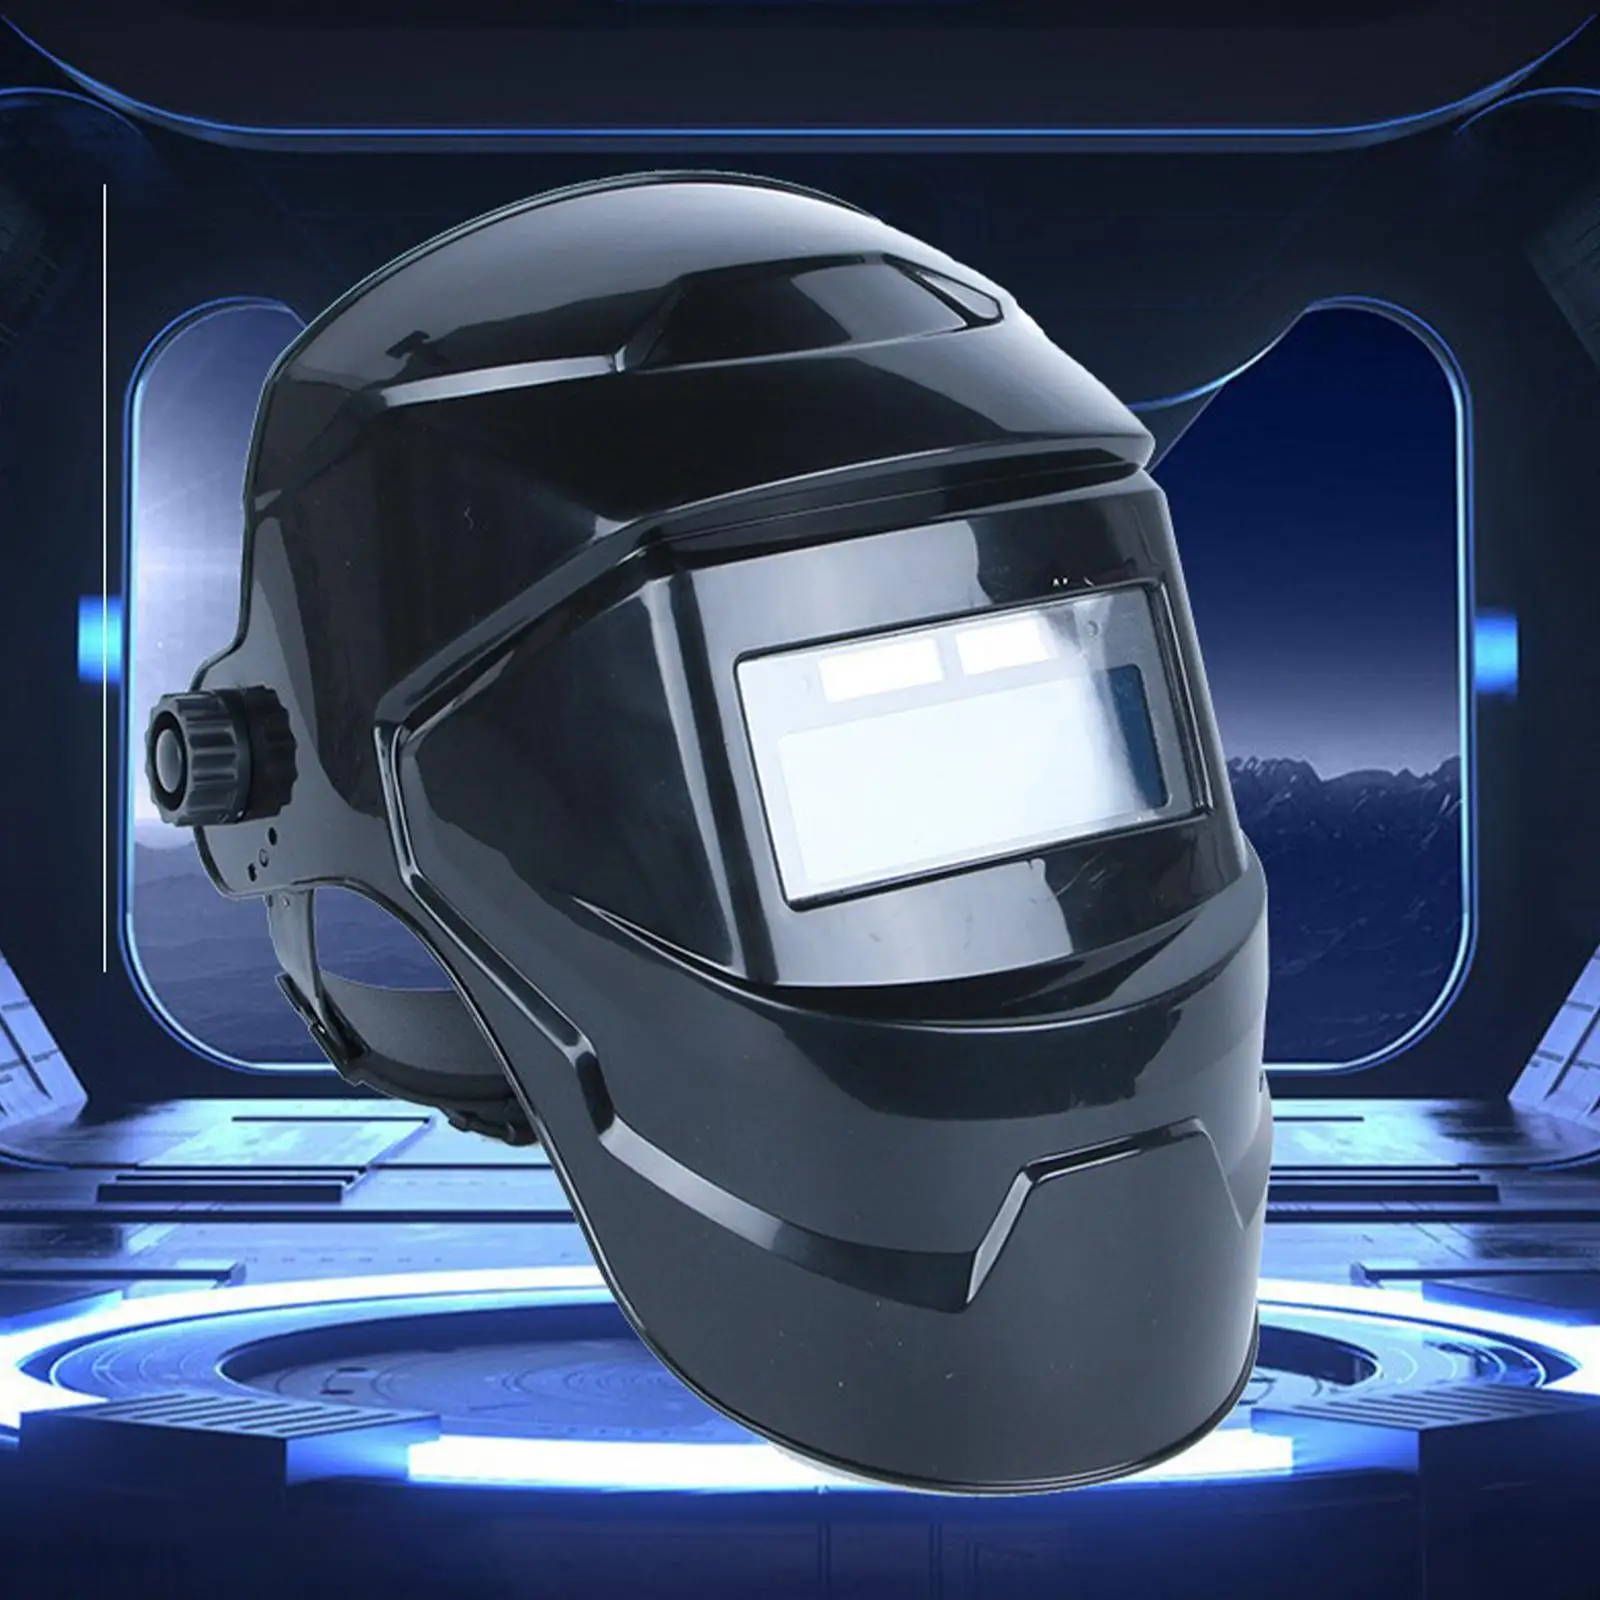 Auto Darkening Welding Helmet Breathable 180° Free Rotation Welding Helmet Welder Mask for TIG Mig ARC All Welding Applications